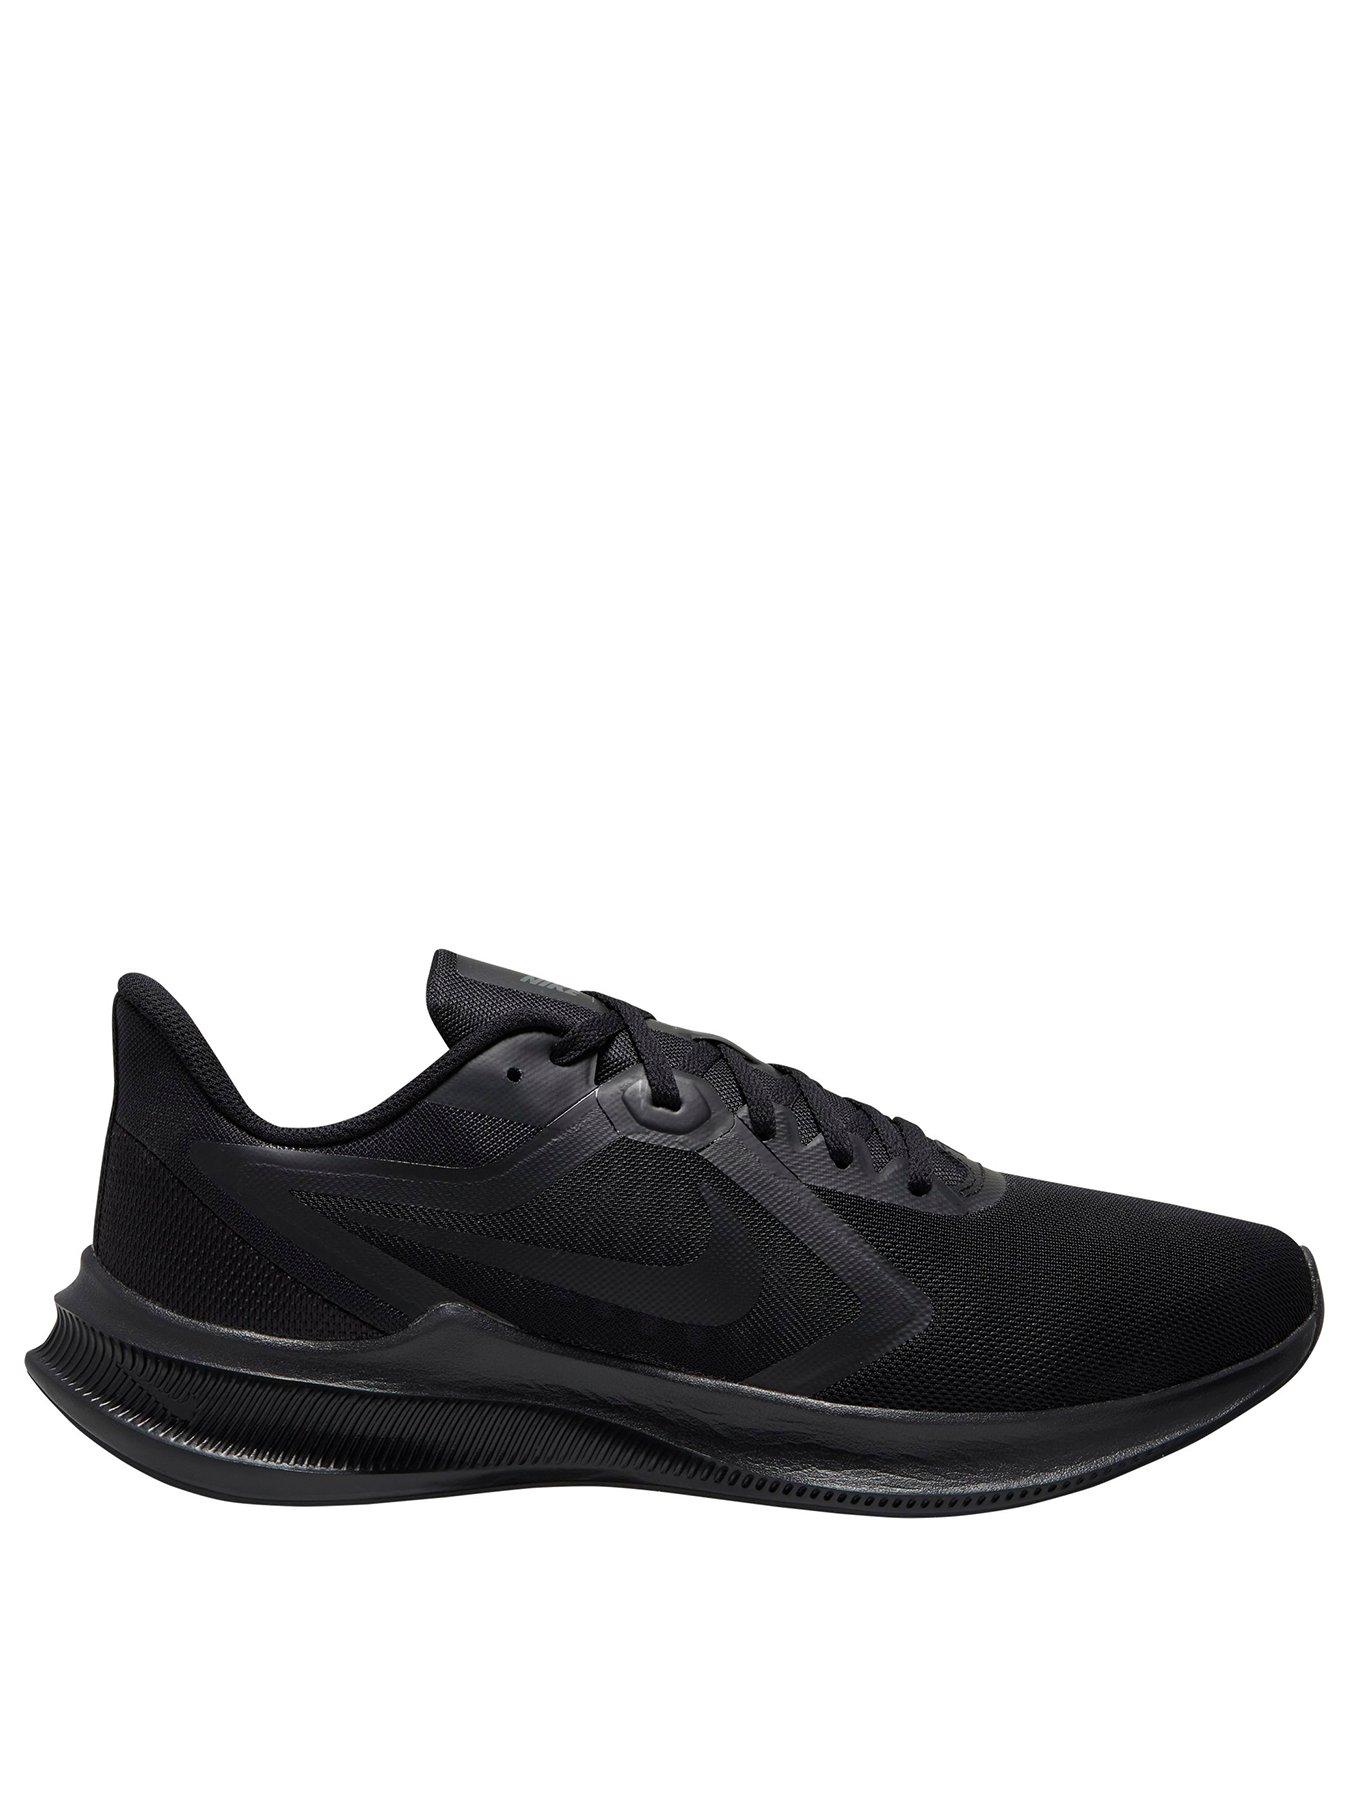 Nike Downshifter 10 - Black/Grey | very.co.uk